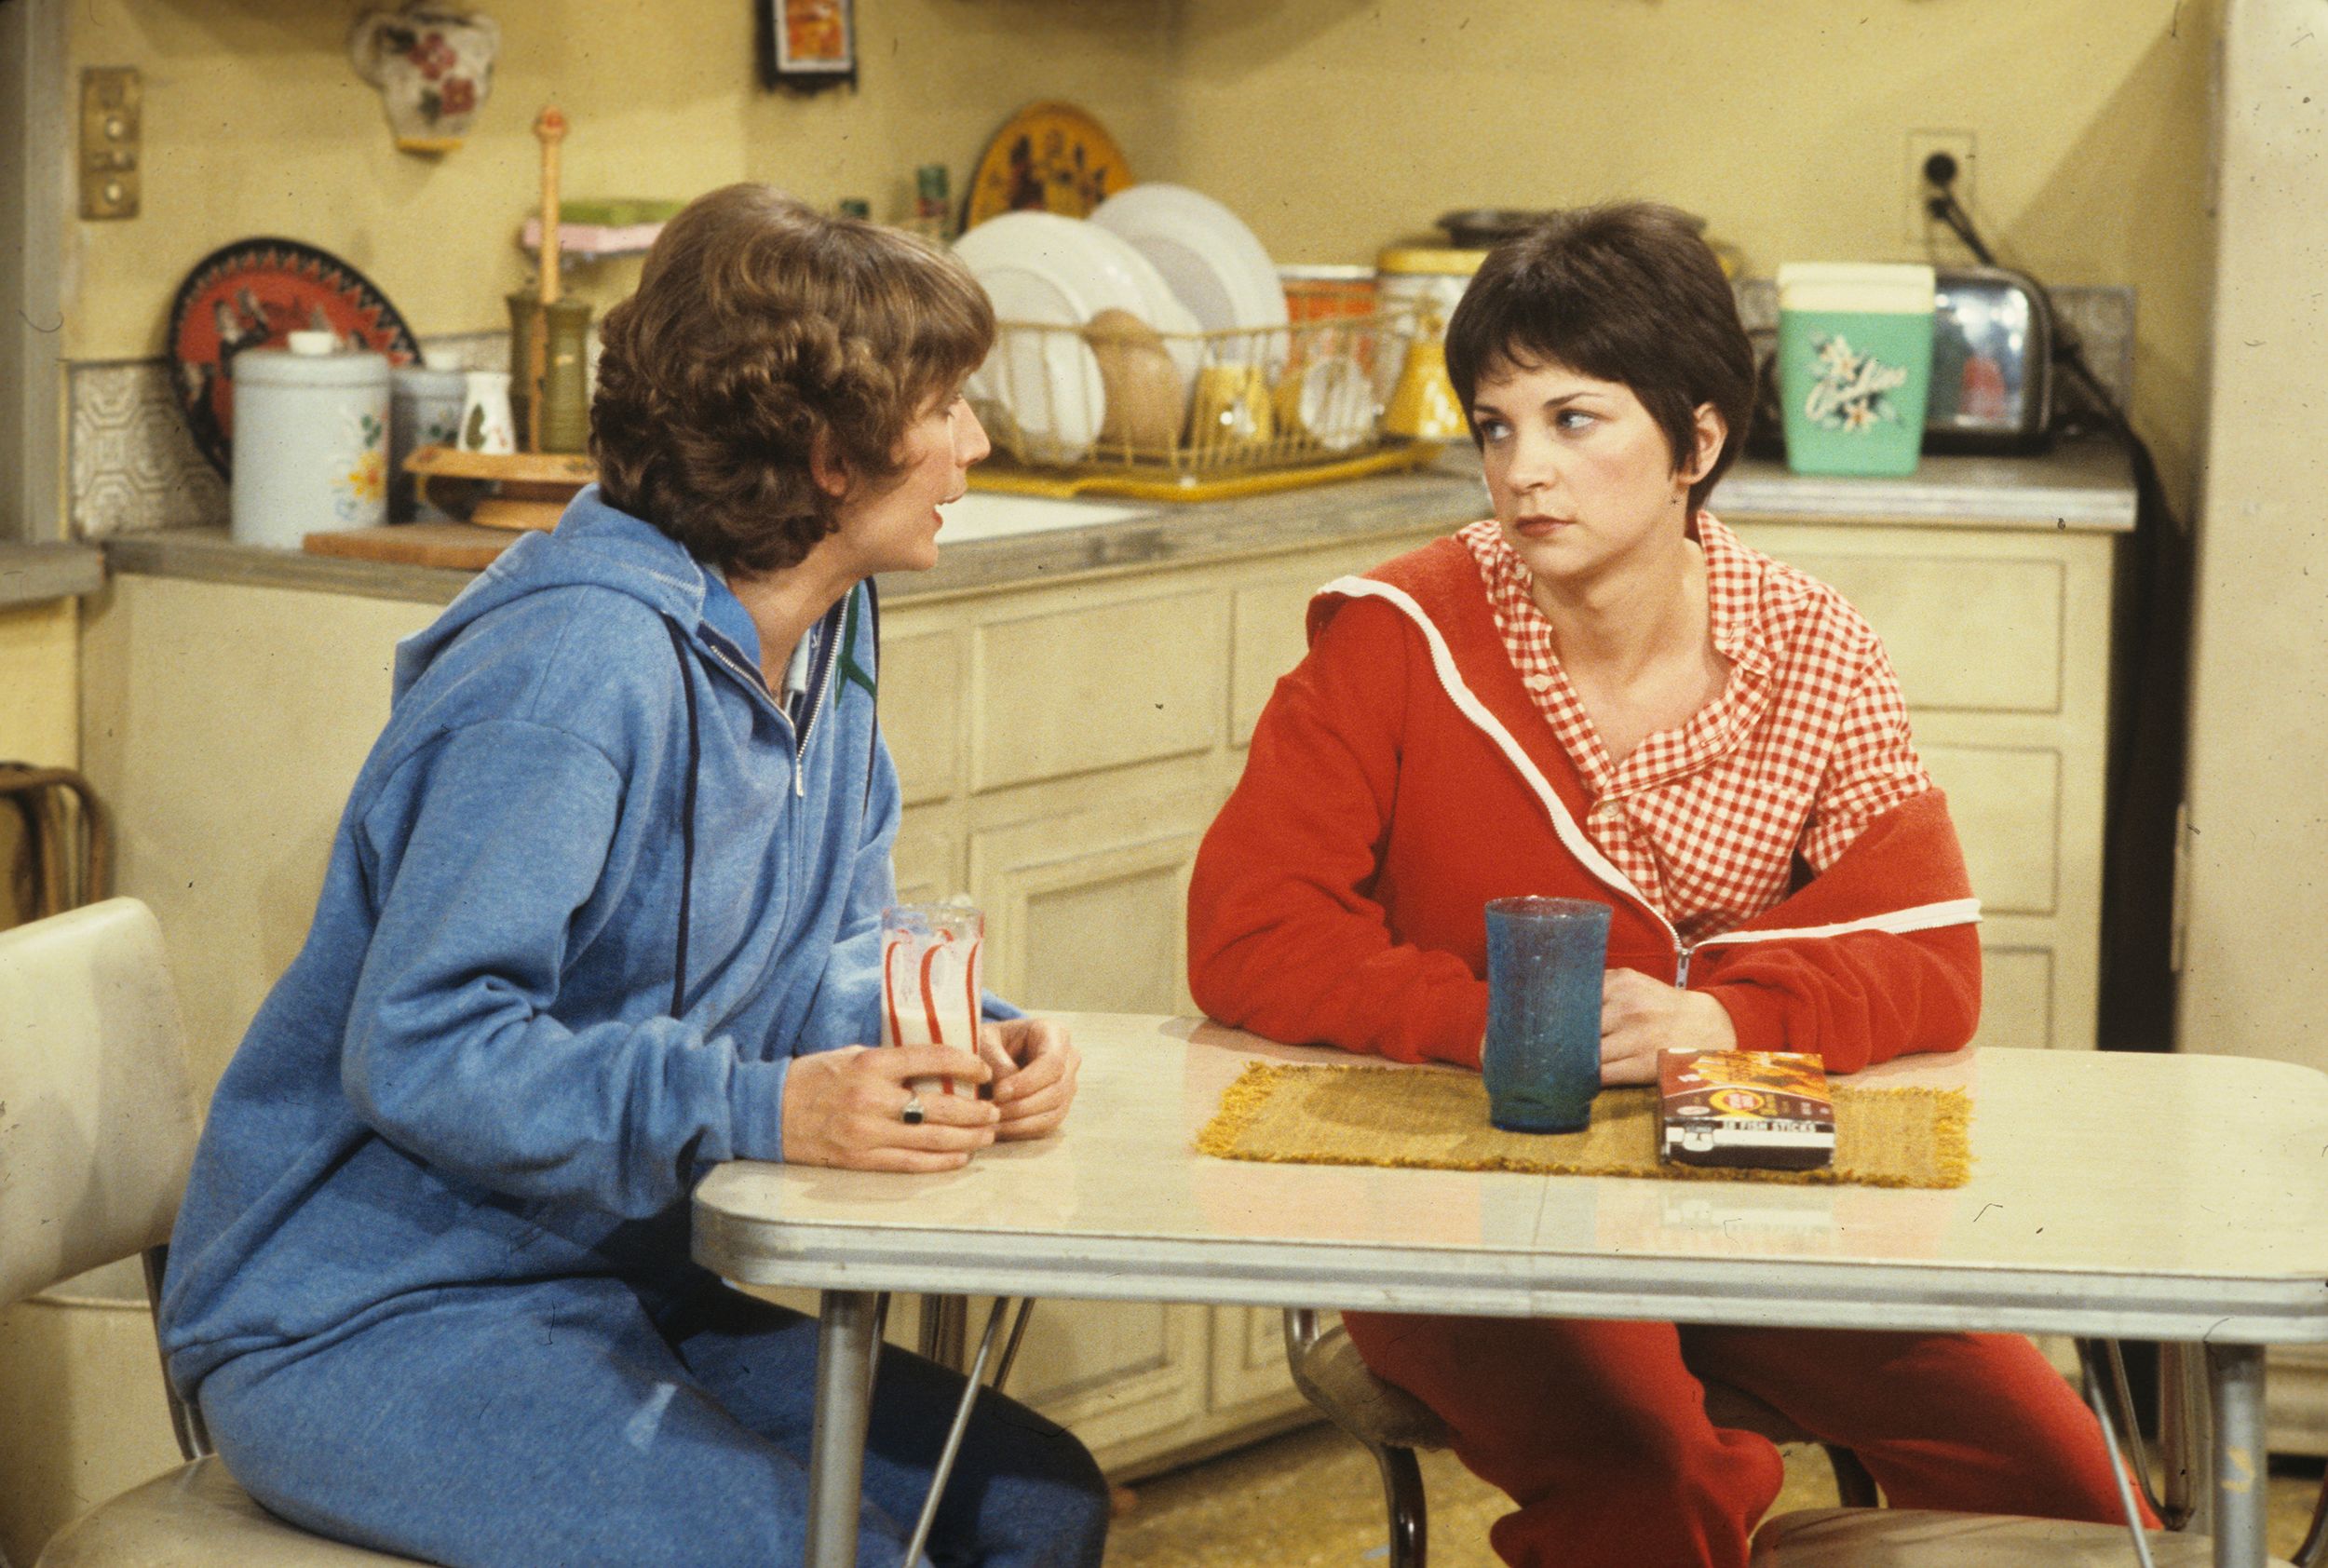 Laverne & Shirley' star Cindy Williams dies at 75 : NPR